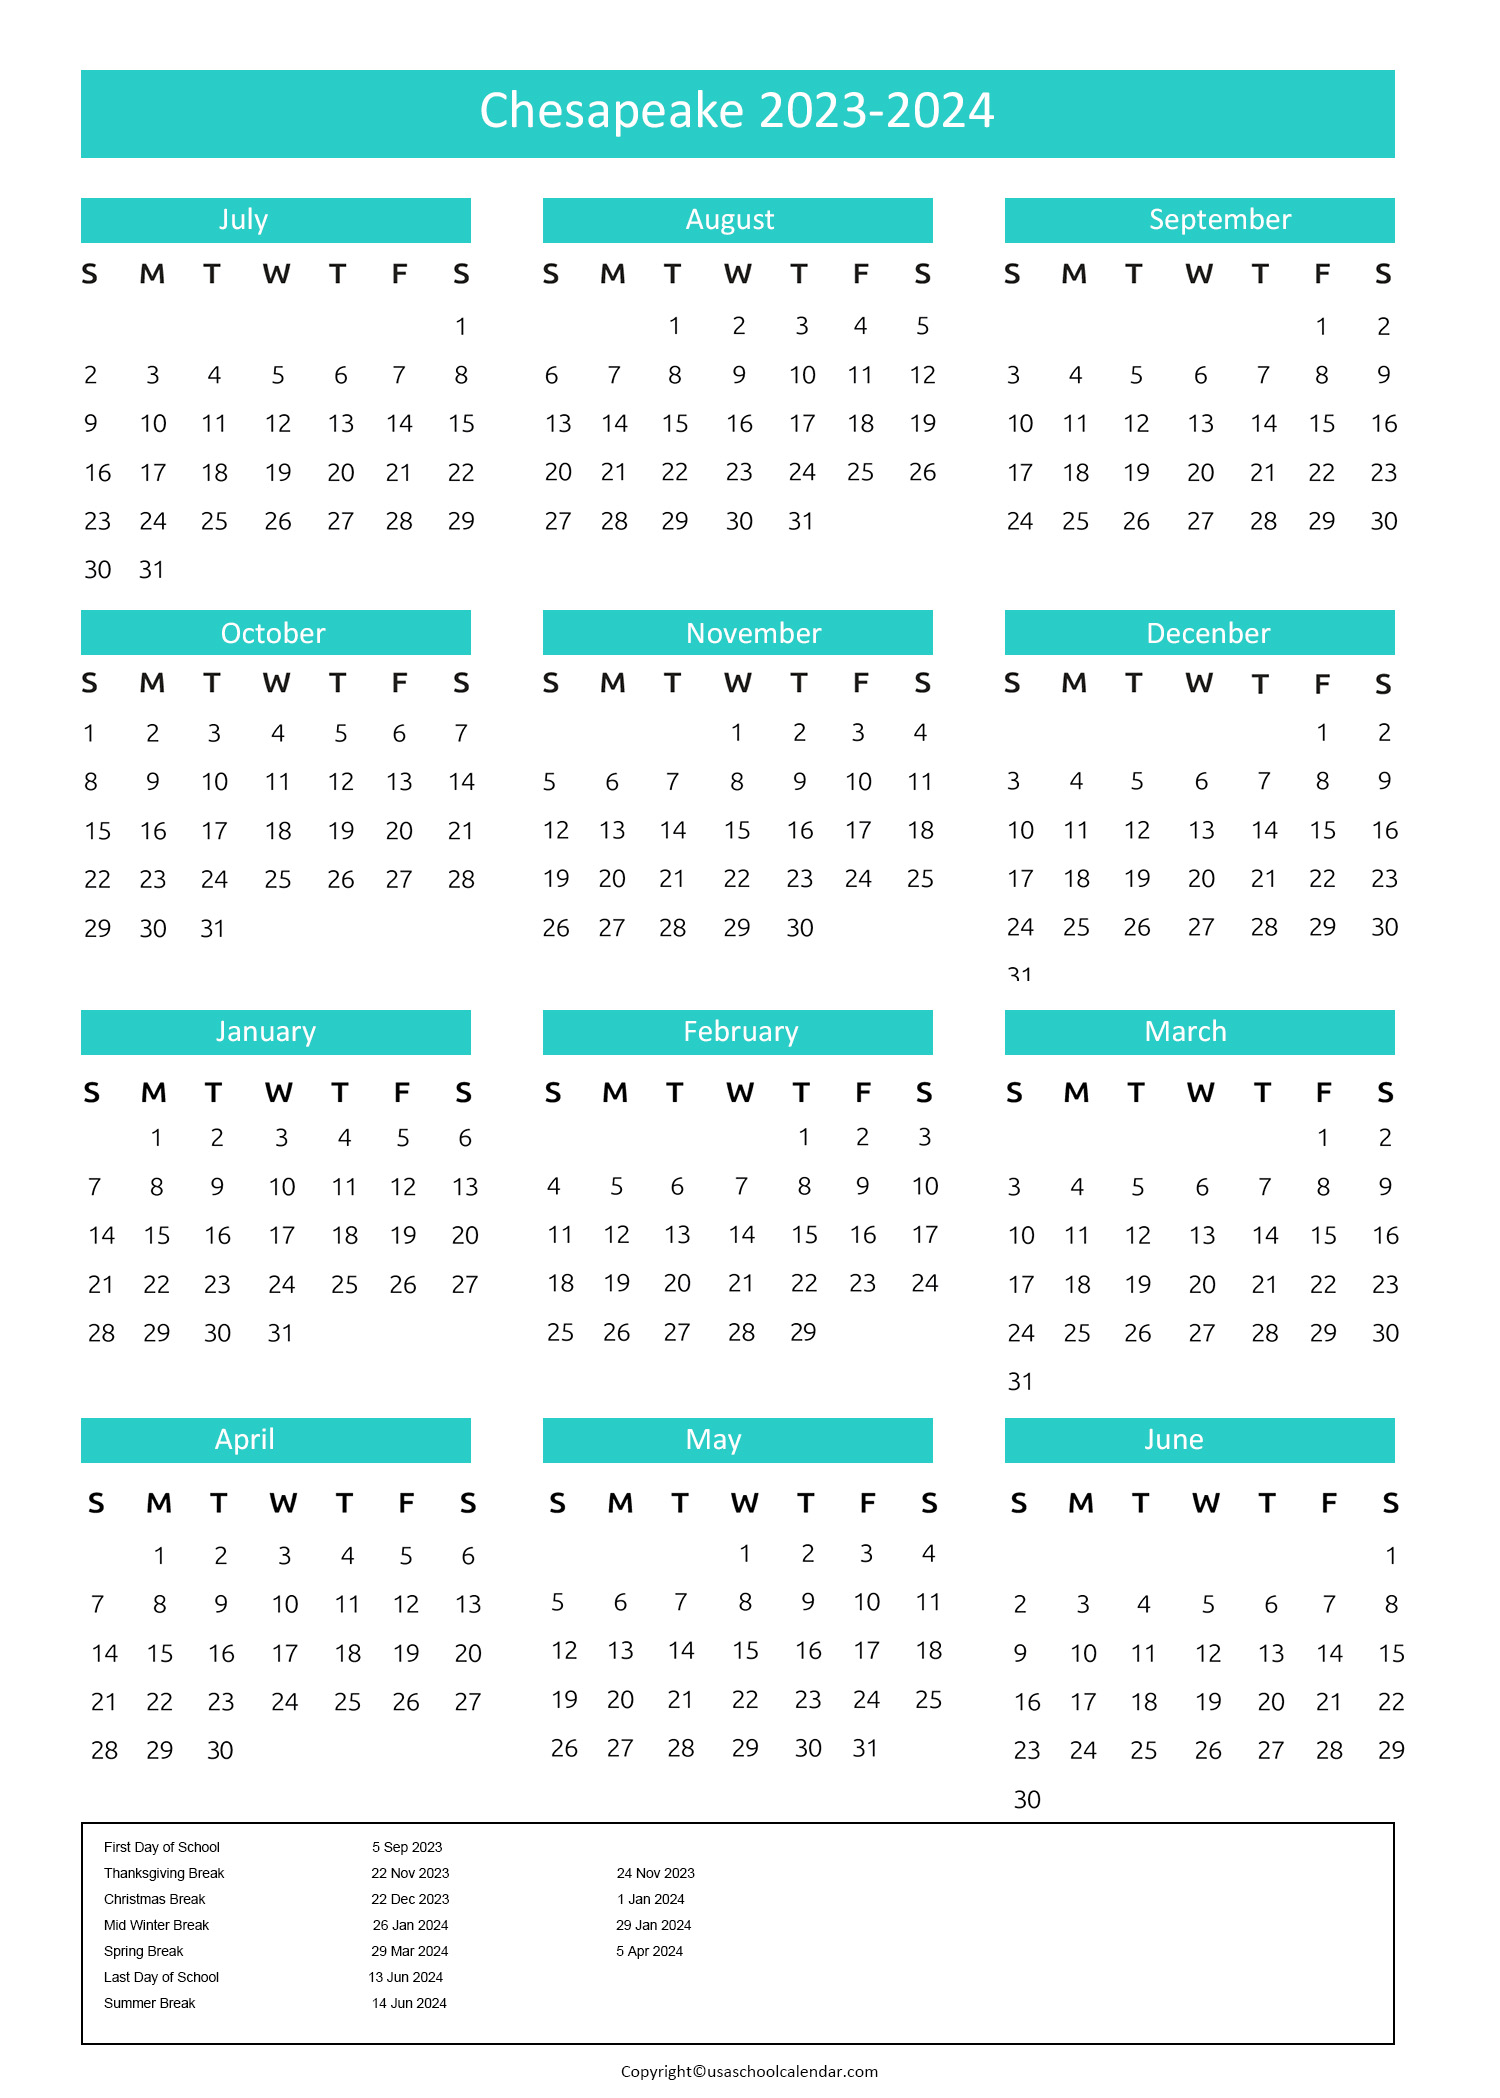 chesapeake-public-schools-calendar-holidays-2023-2024